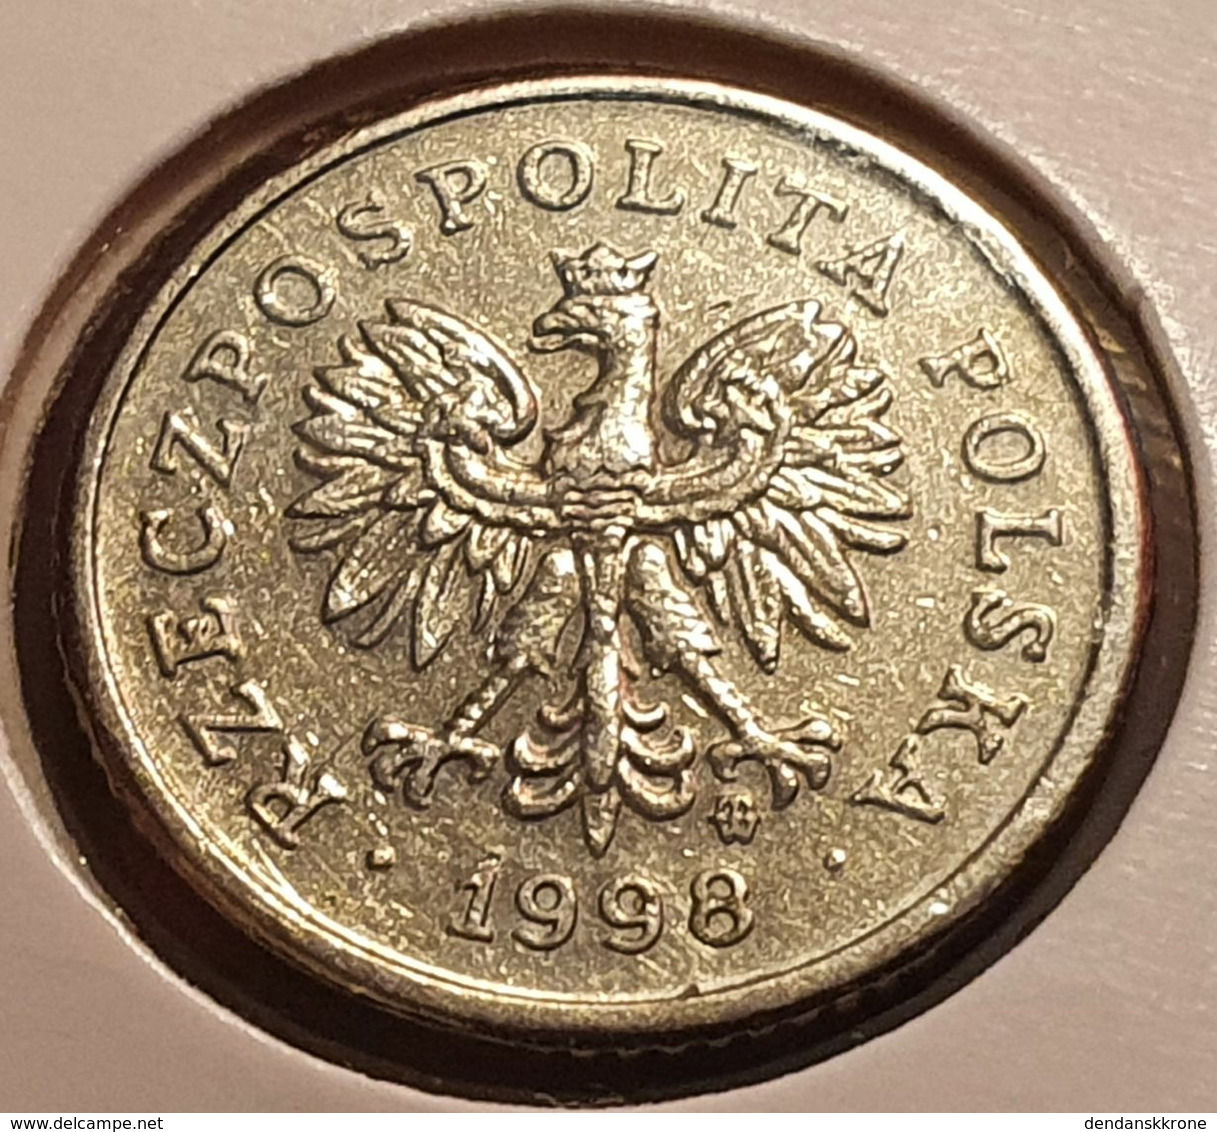 10 Groszy Pologne (Polen) 1998 Warsaw - Copper-Nickel - Polen